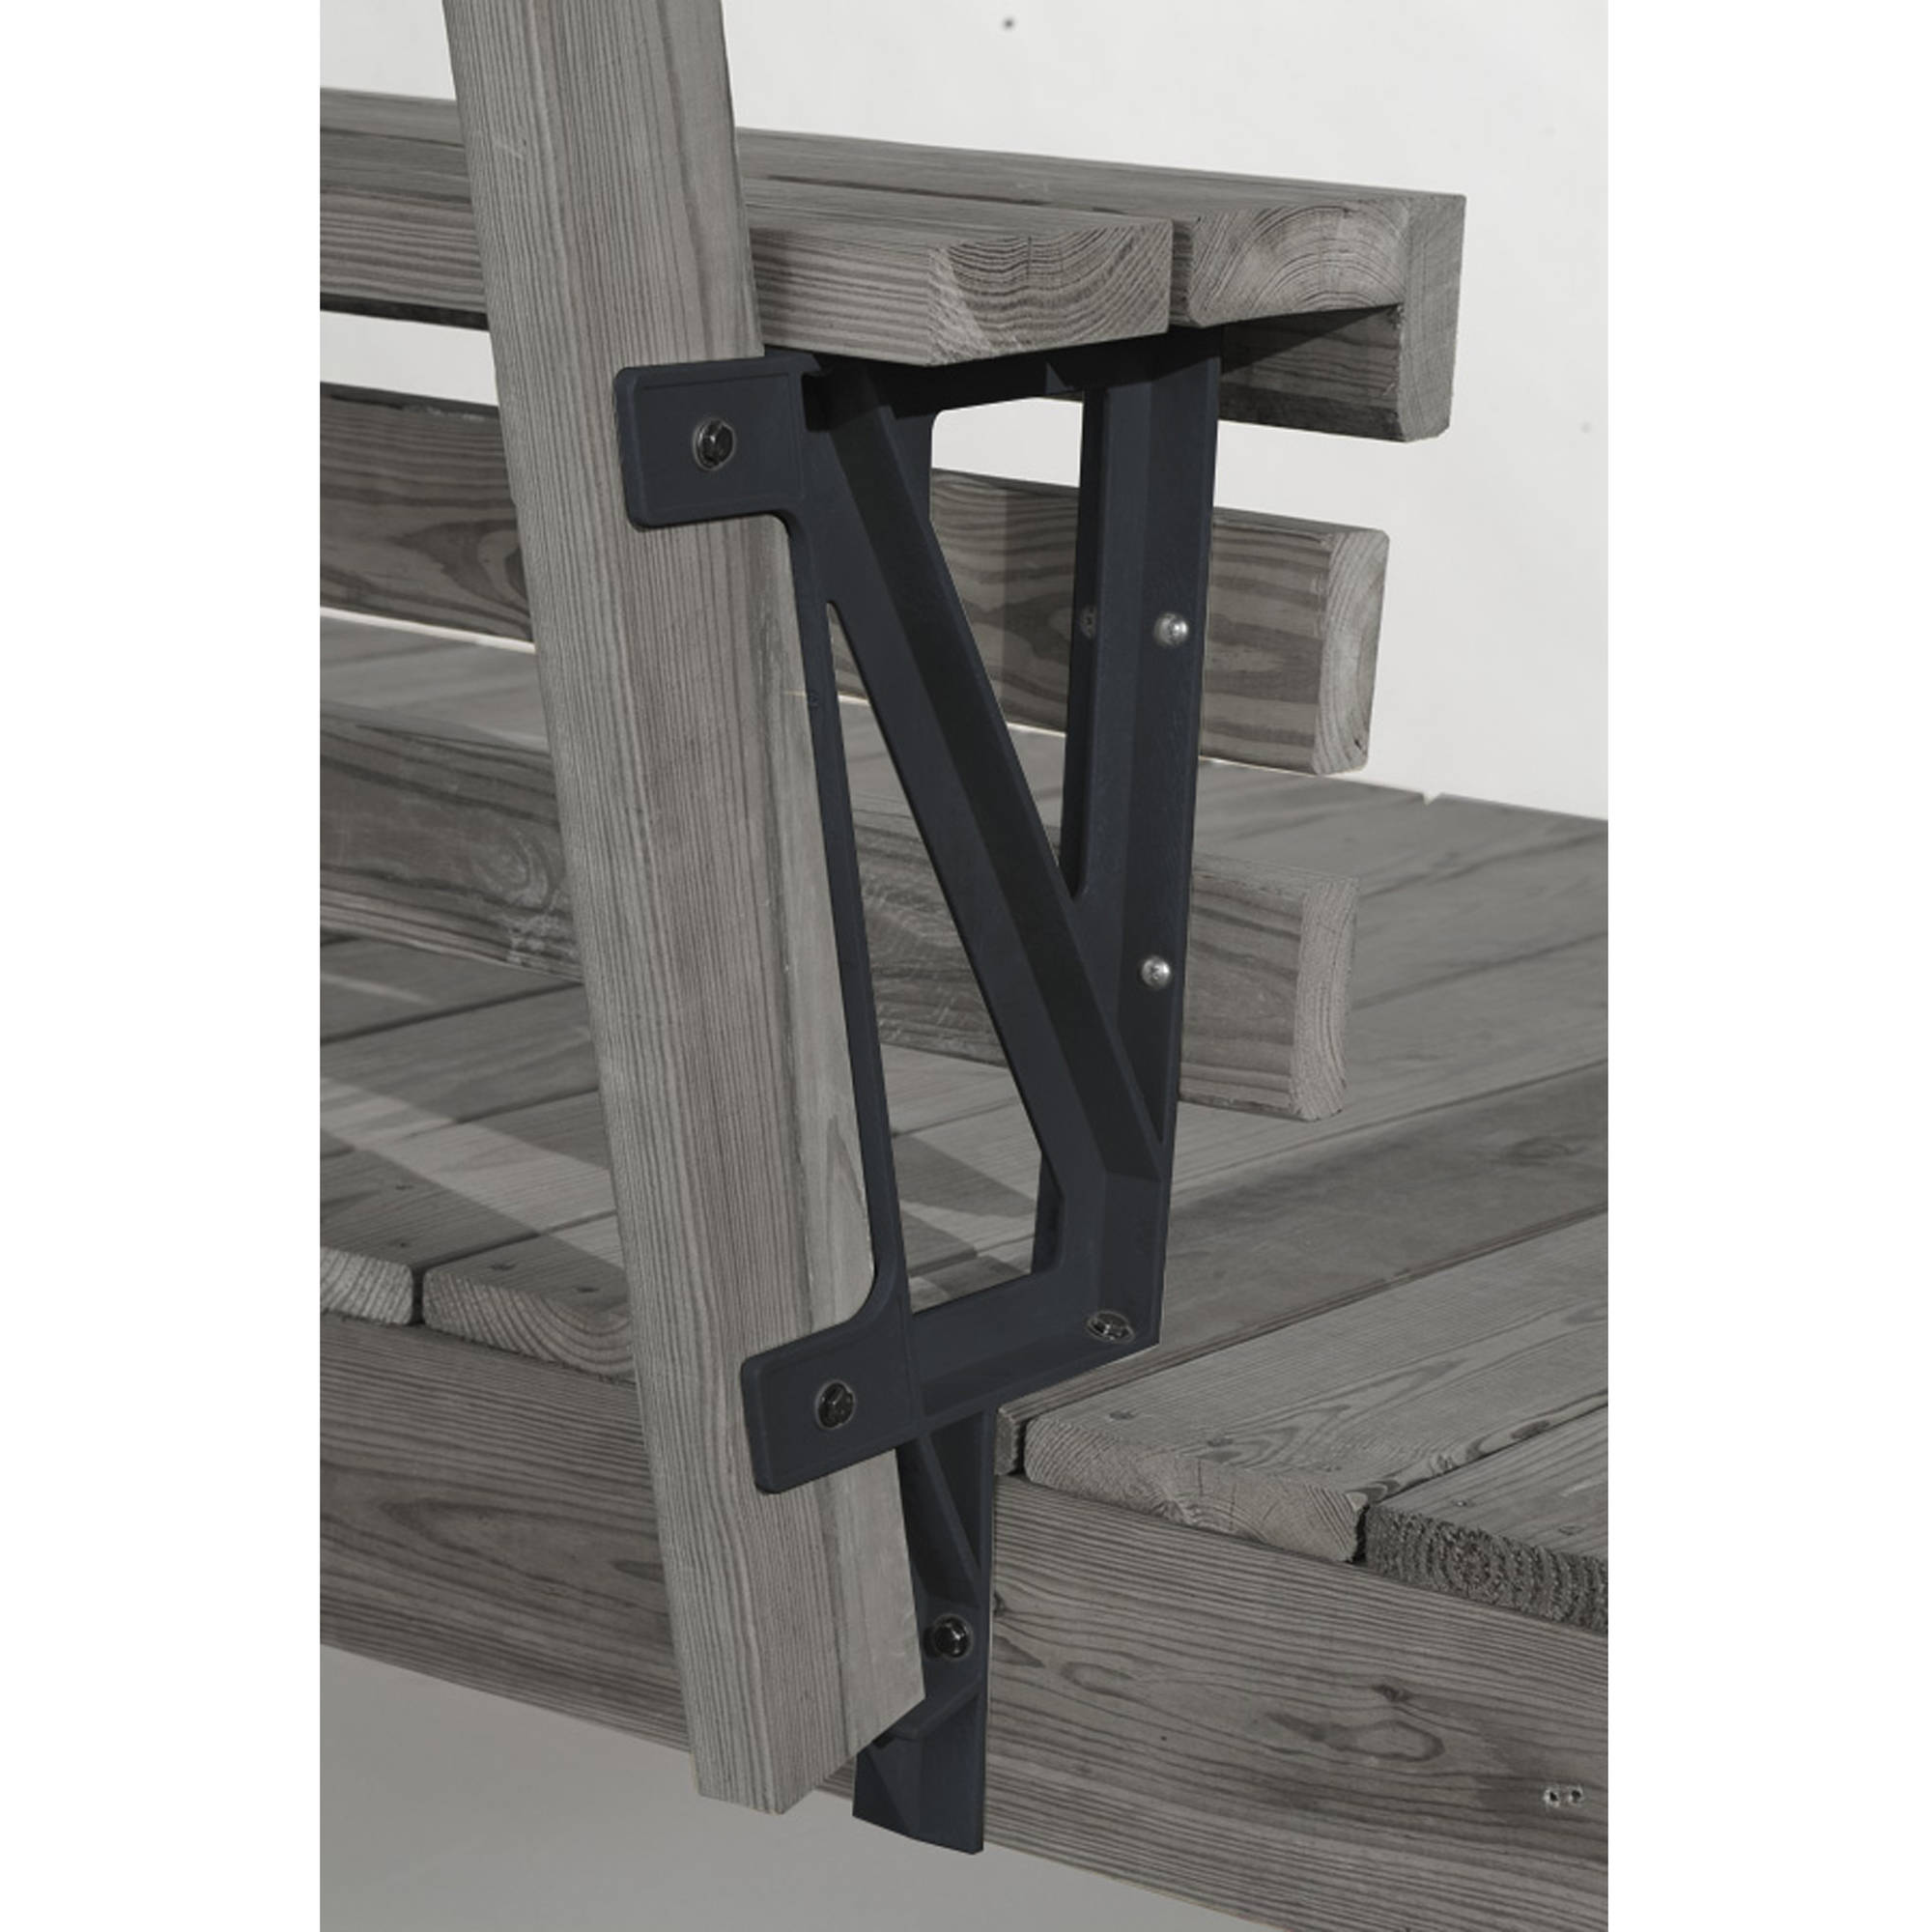 2x4basics Dekmate Deck Bench Brackets – Black, 2 pack - image 4 of 5